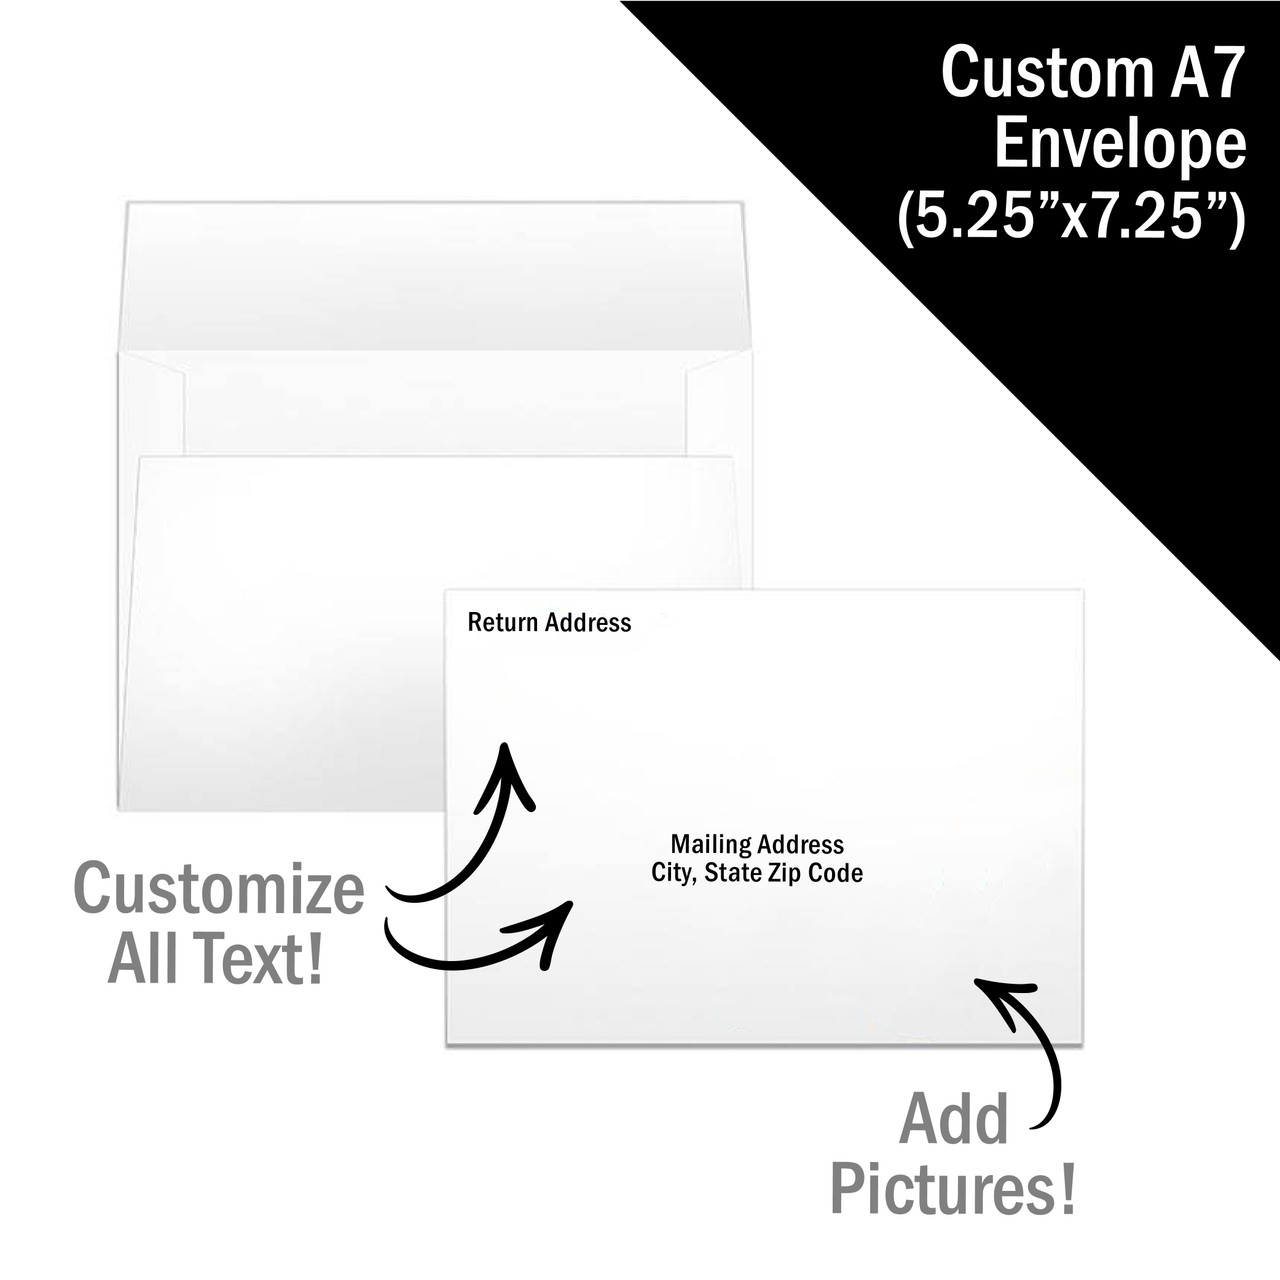 How To Create A Custom 5 x 7 Envelope 